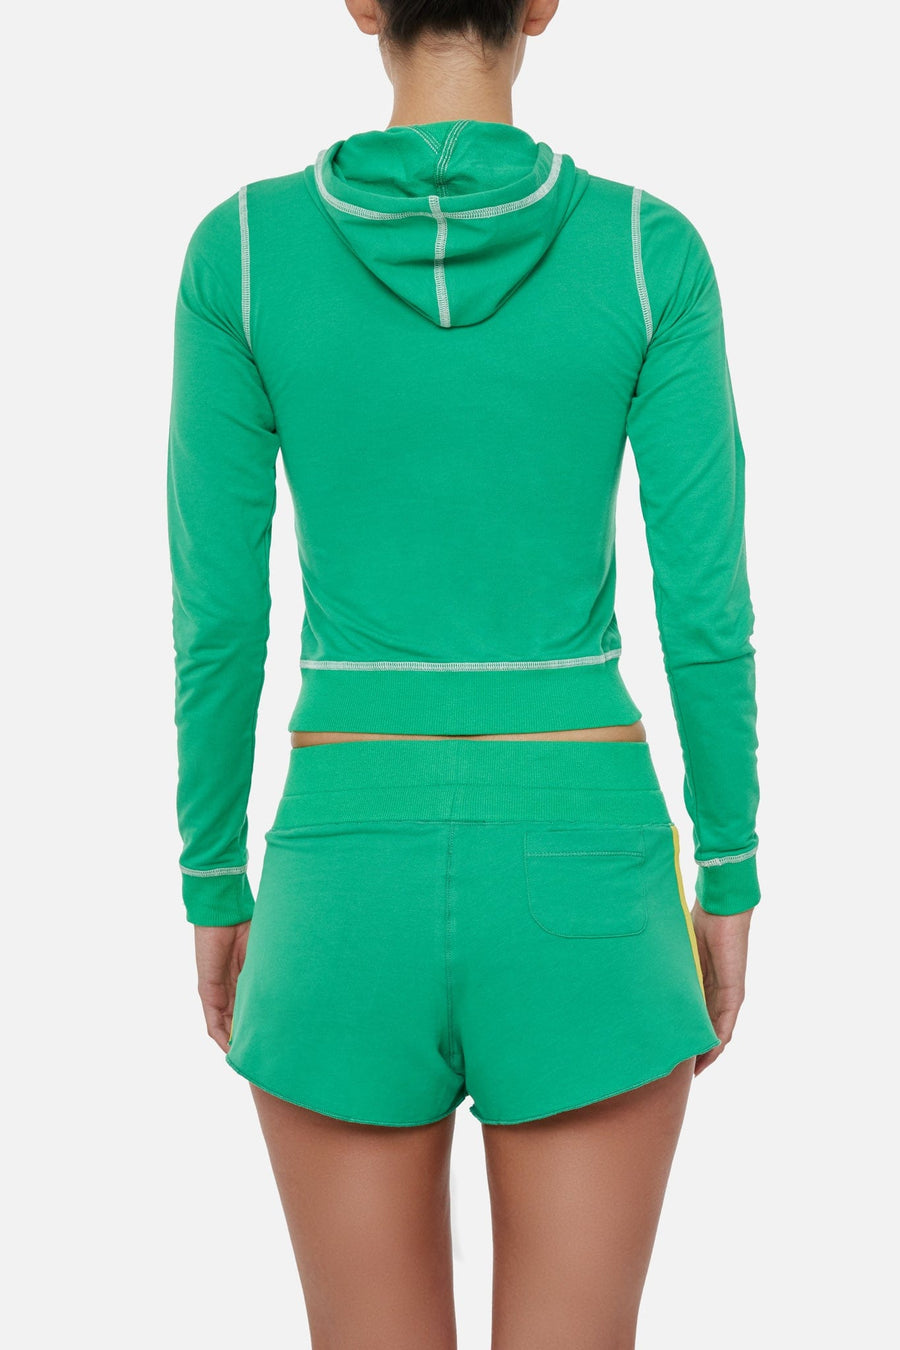 ESPRITE jacket- forest green  -  CLOTHING  -  B Ā M B A S W I M